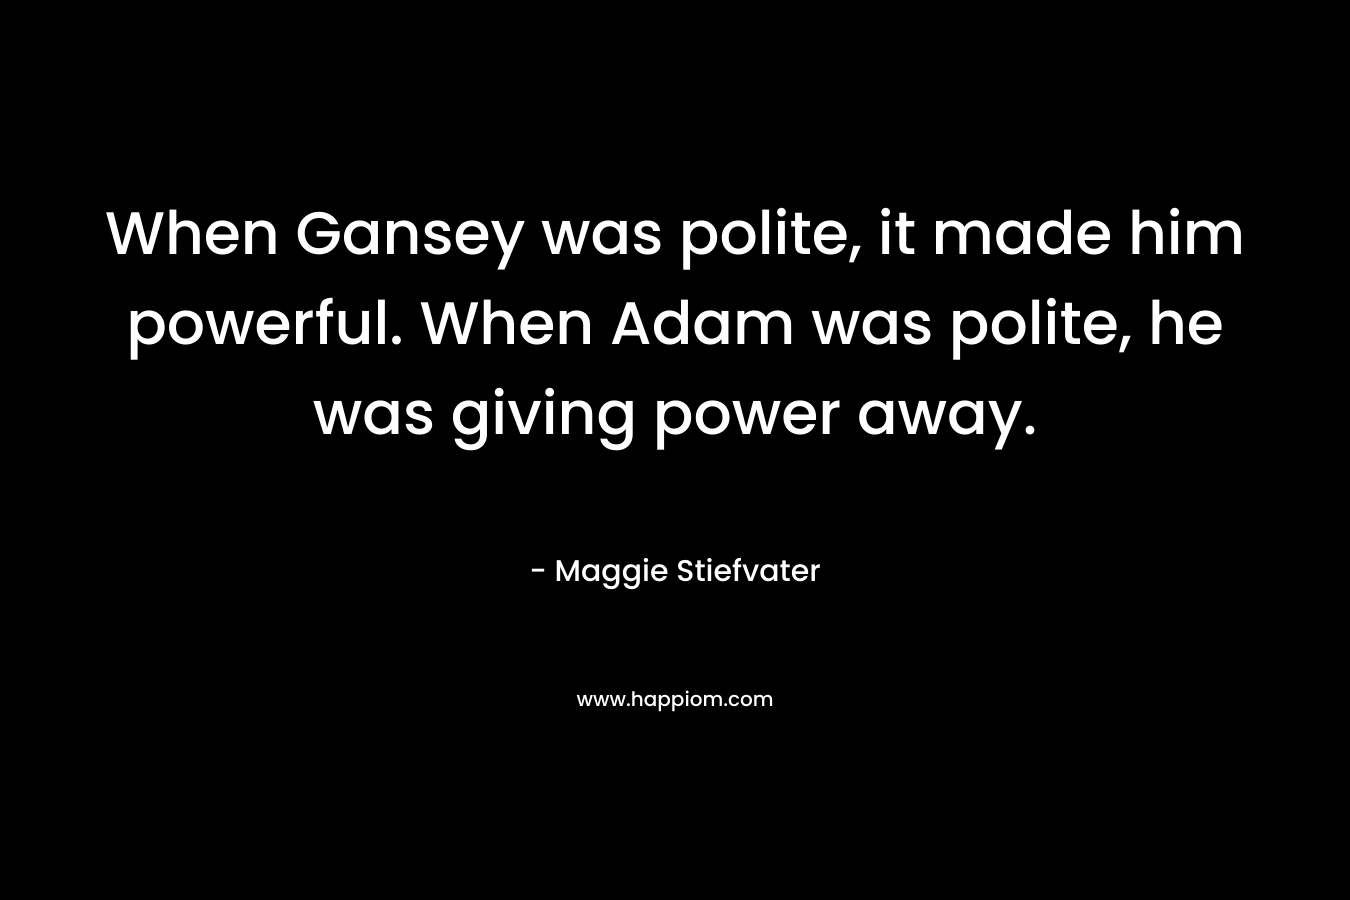 When Gansey was polite, it made him powerful. When Adam was polite, he was giving power away. – Maggie Stiefvater